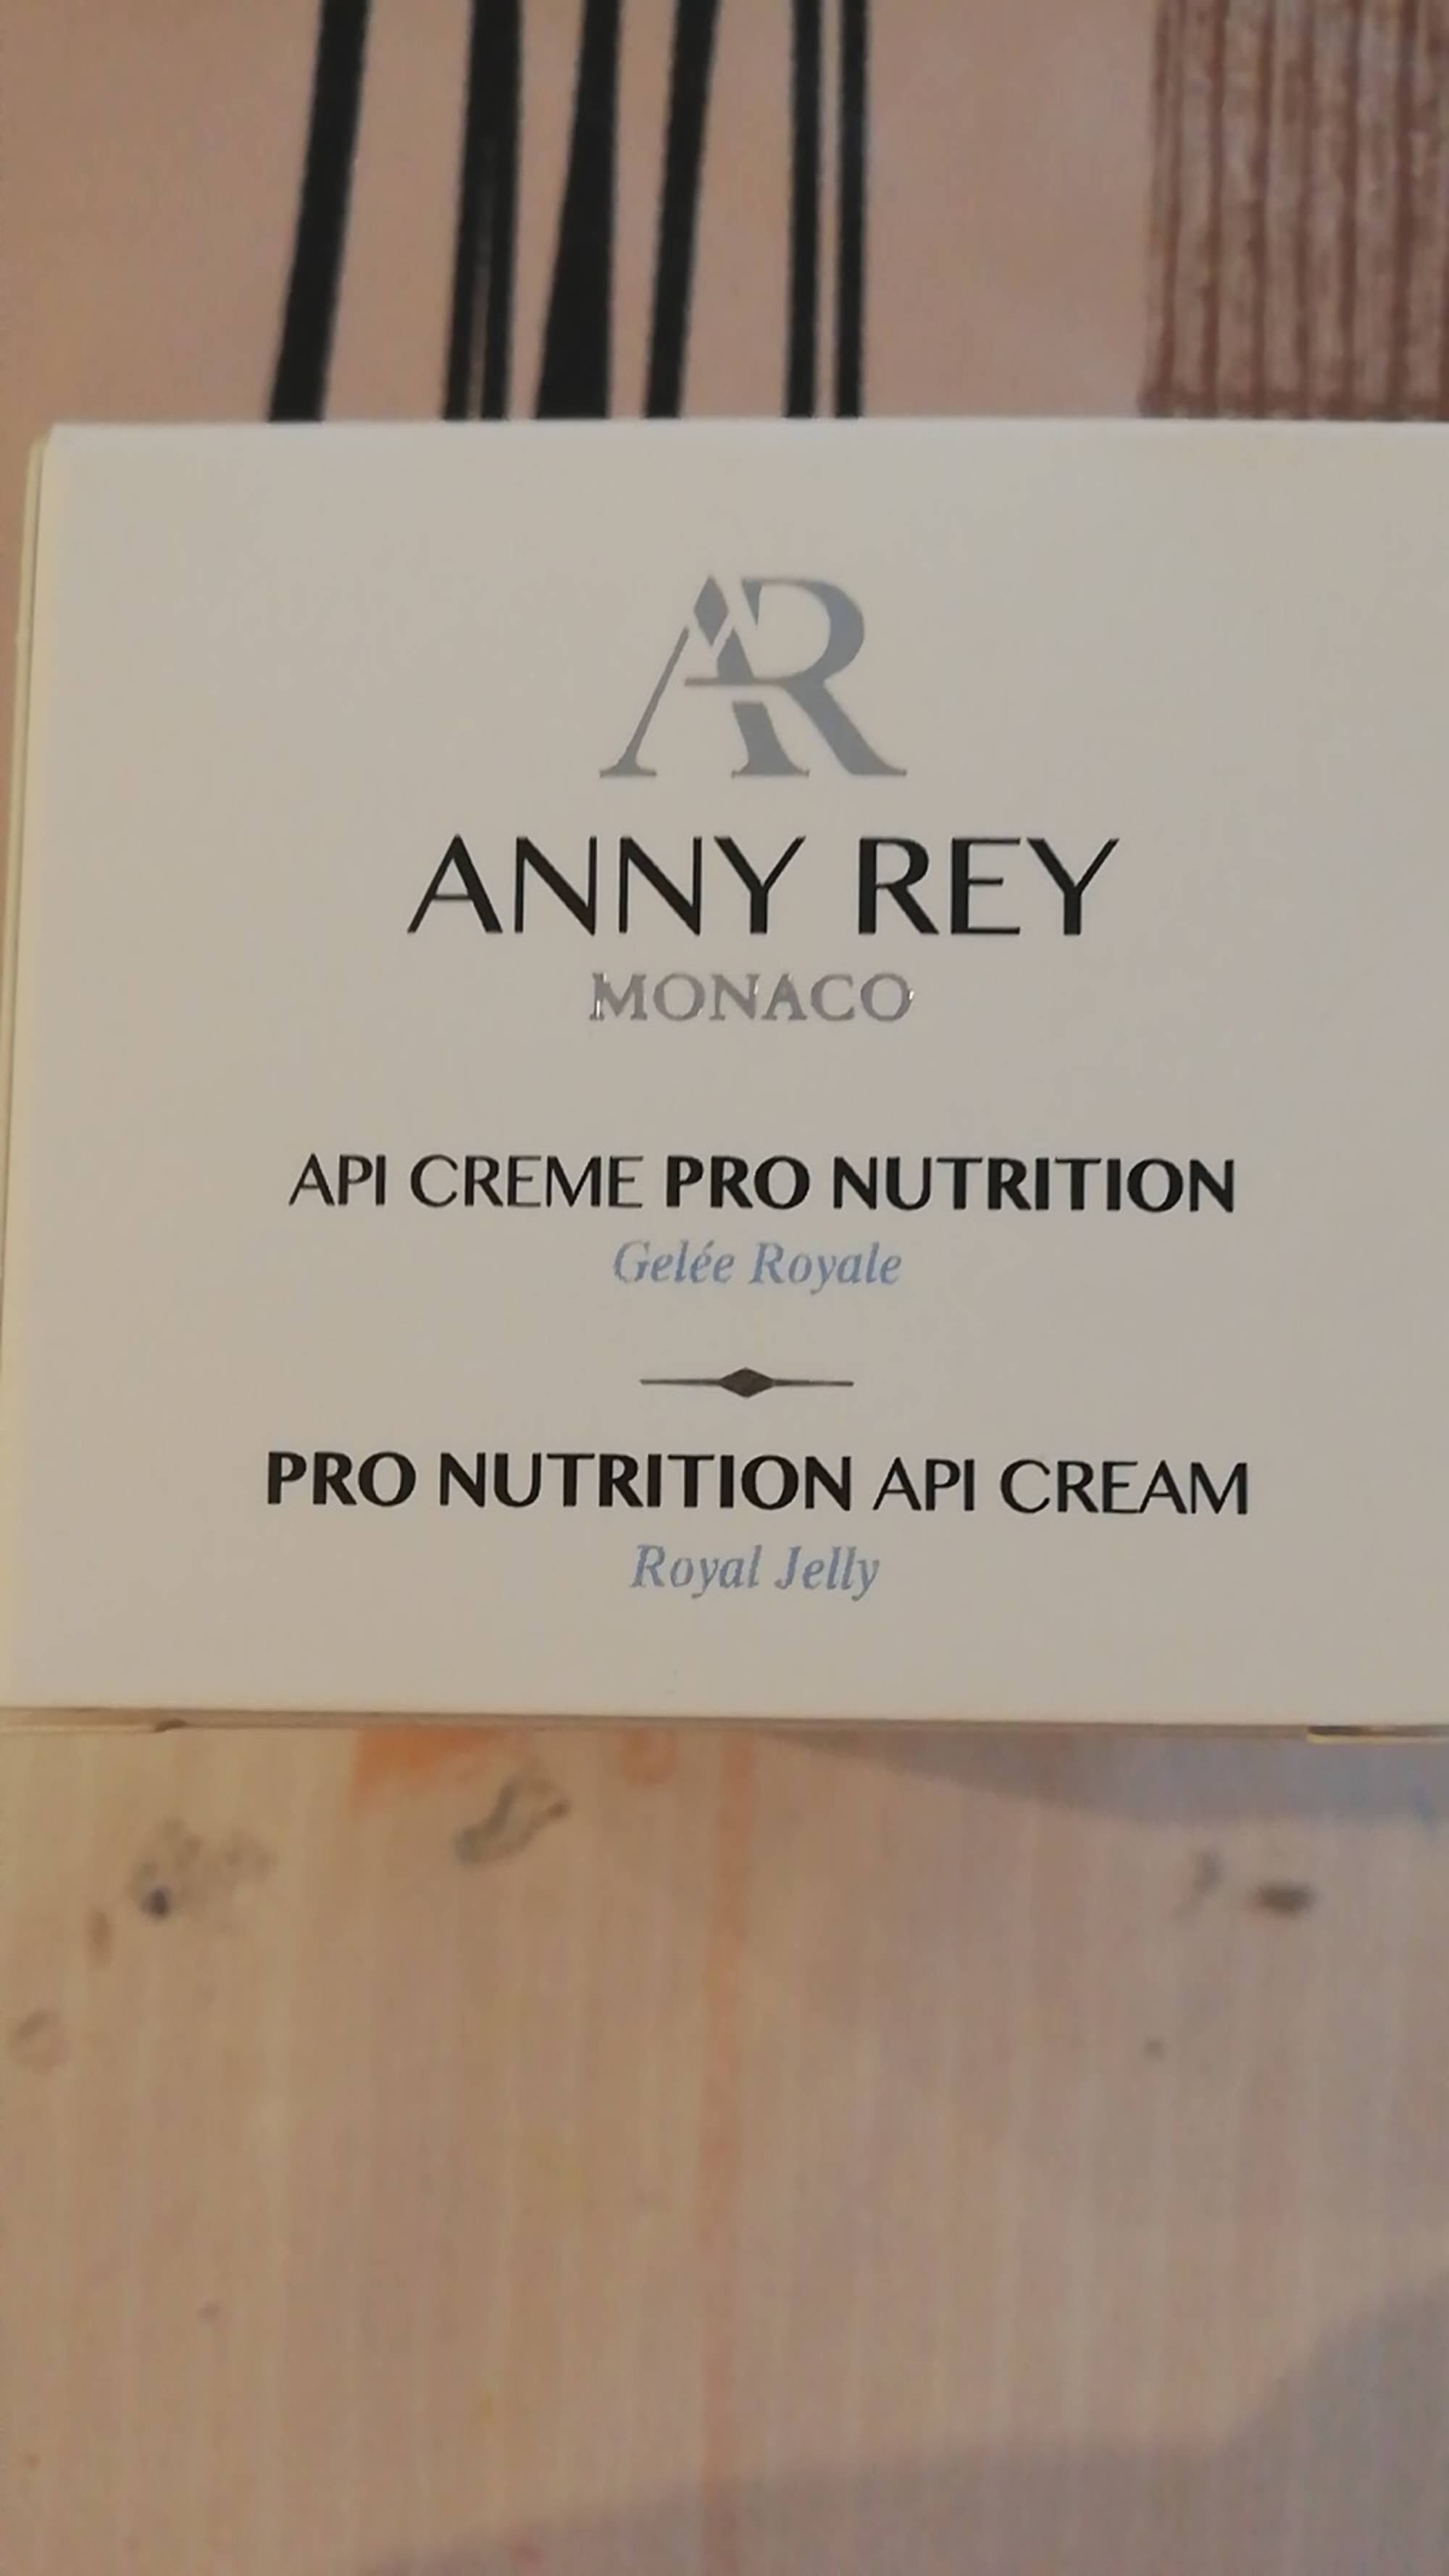 ANNY REY - Api crème pro nutrition - Gelée royale